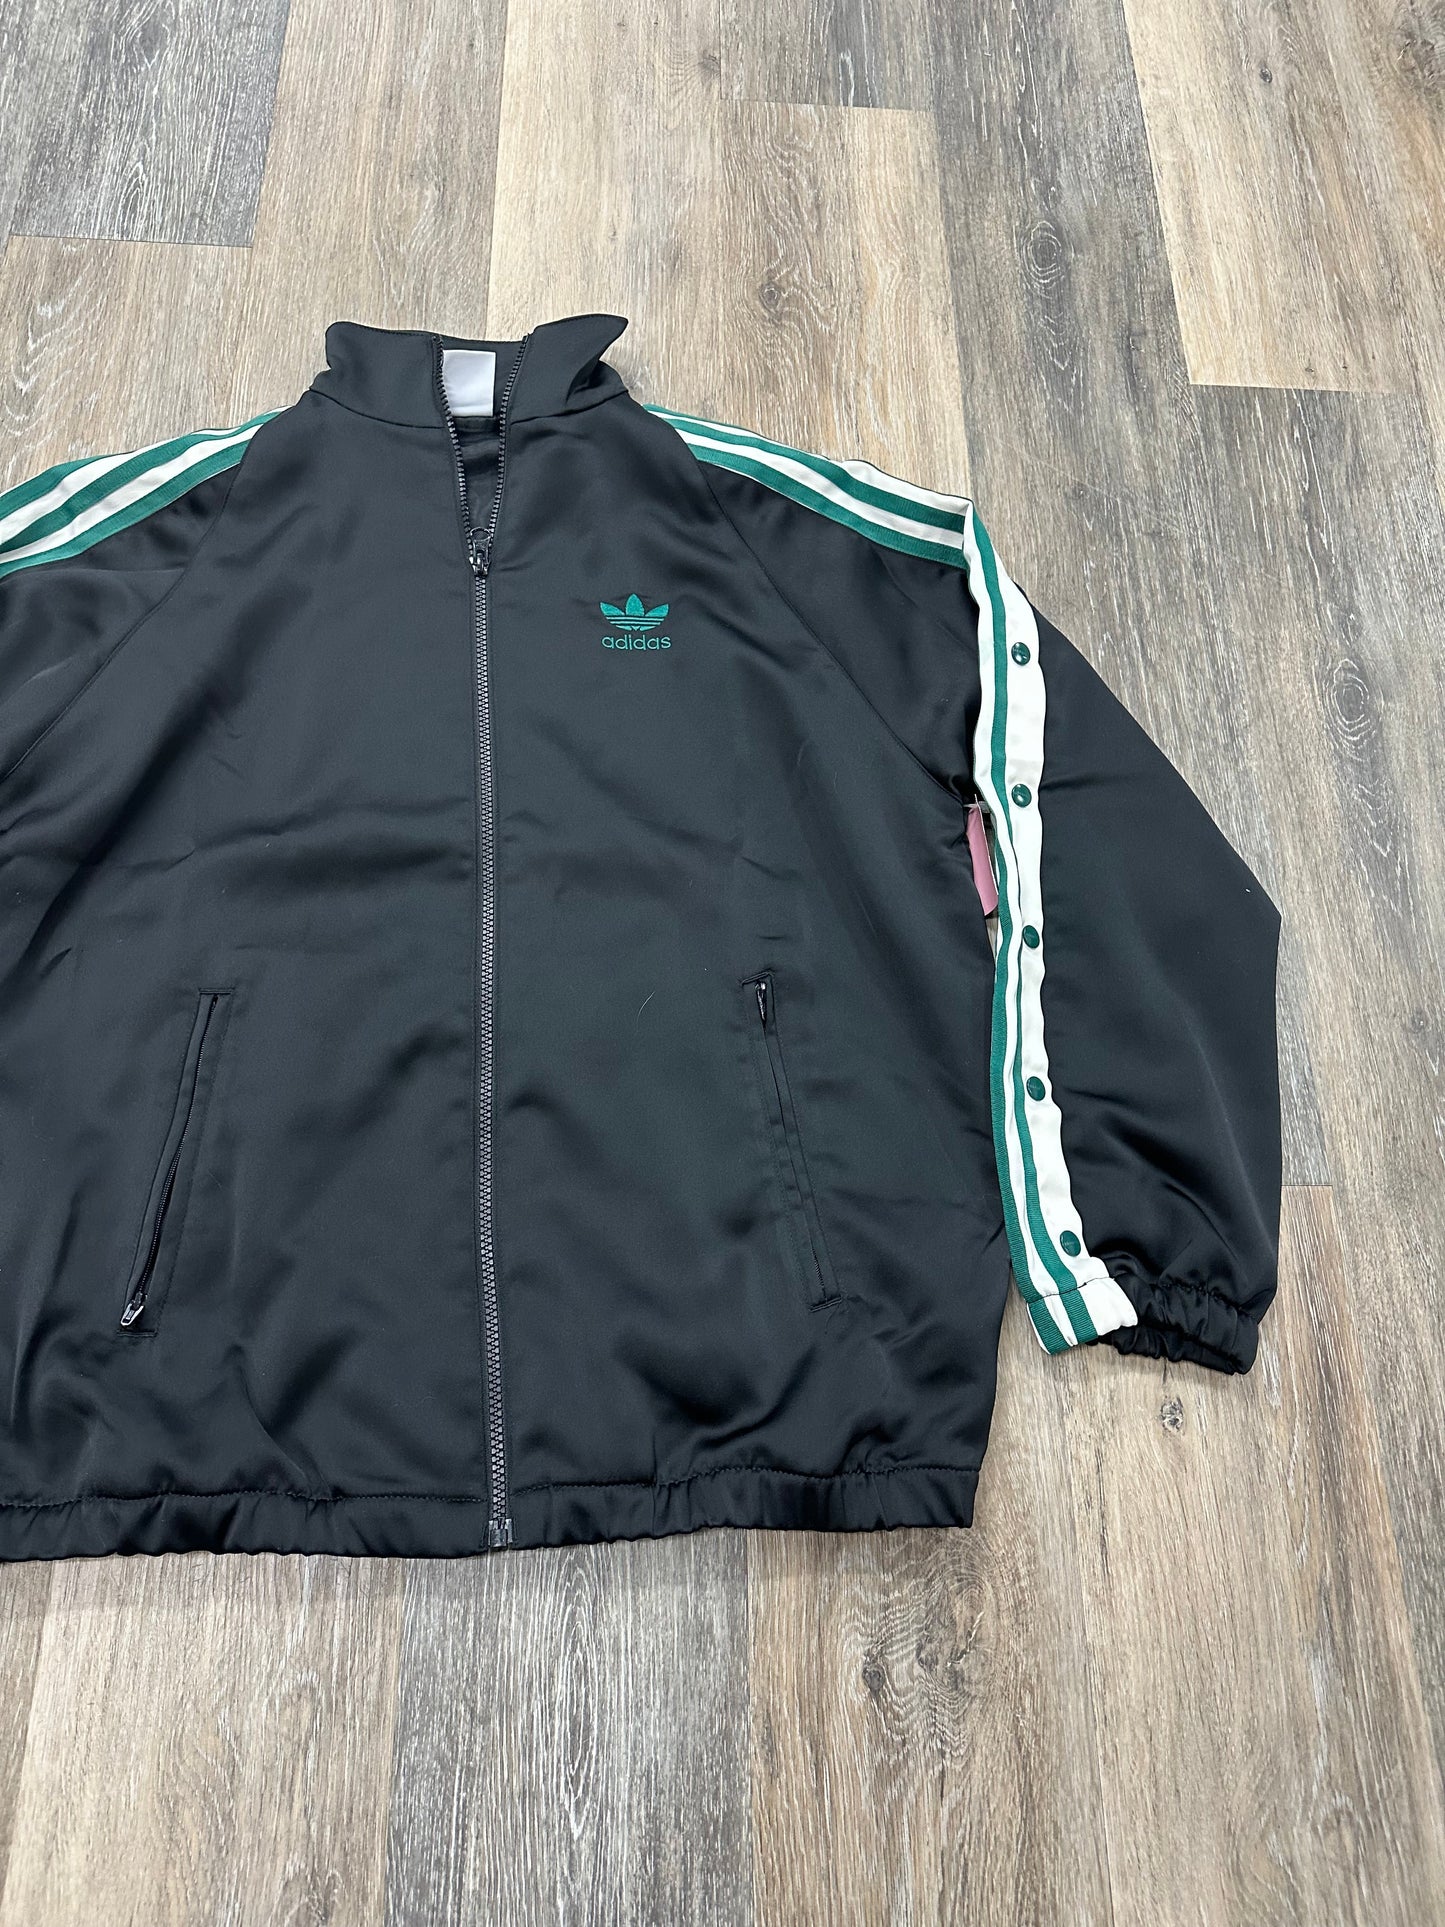 Athletic Jacket By Adidas  Size: Xs